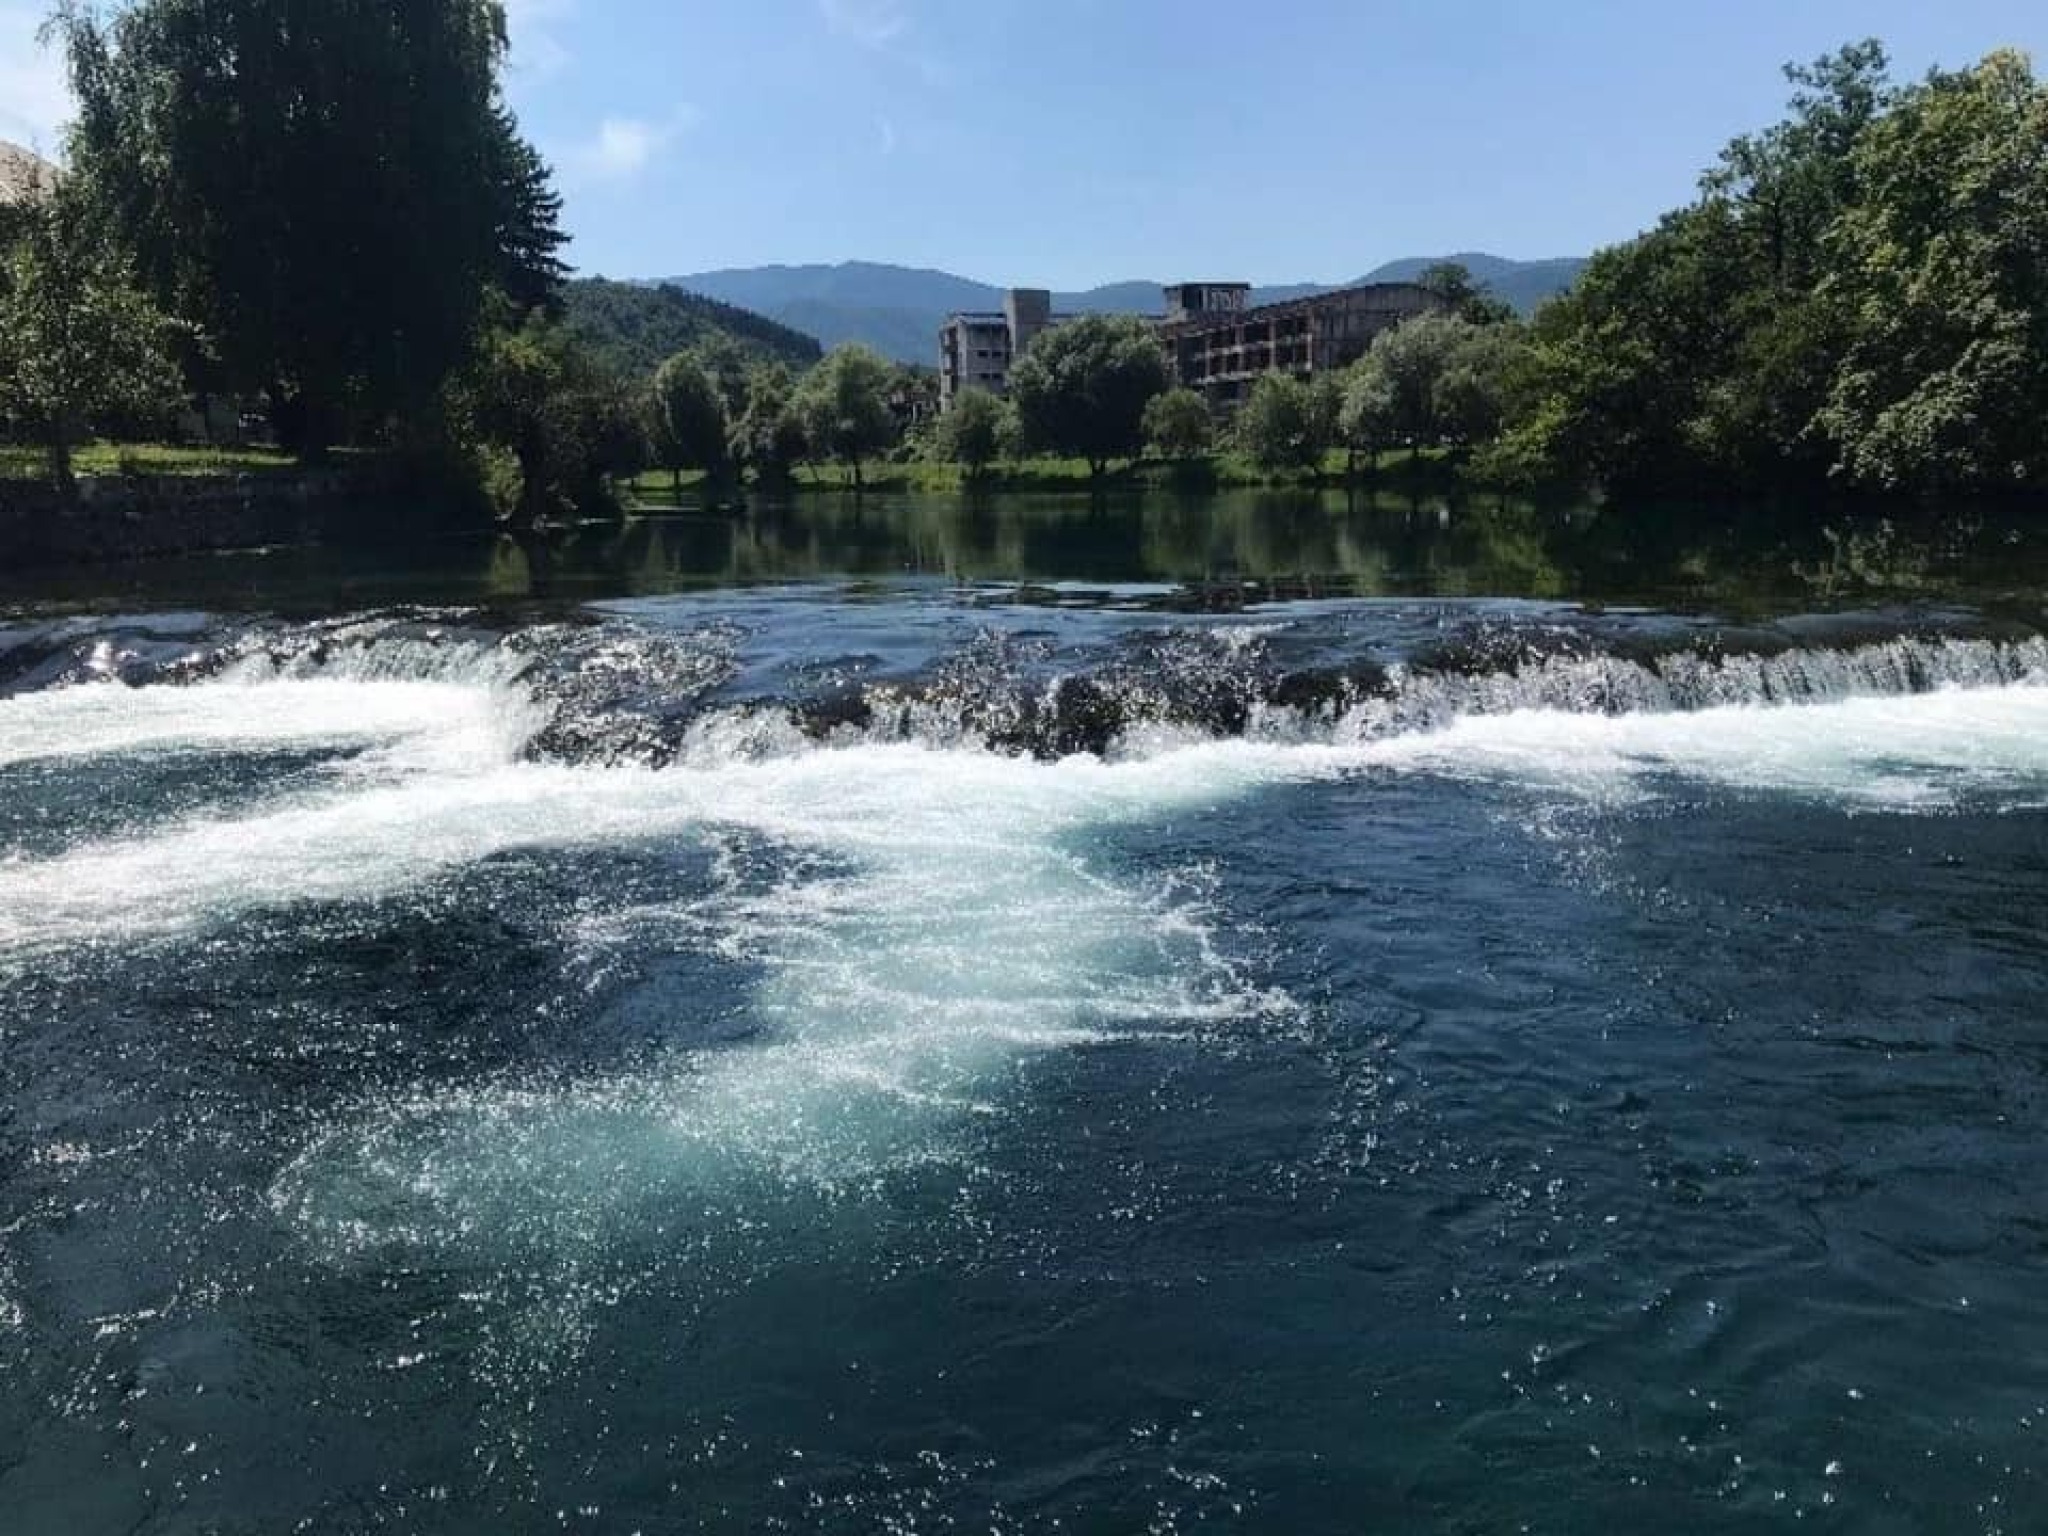 The Una River and Dom penzionera in the background. Photo by Azra Hromadžić, 2019.